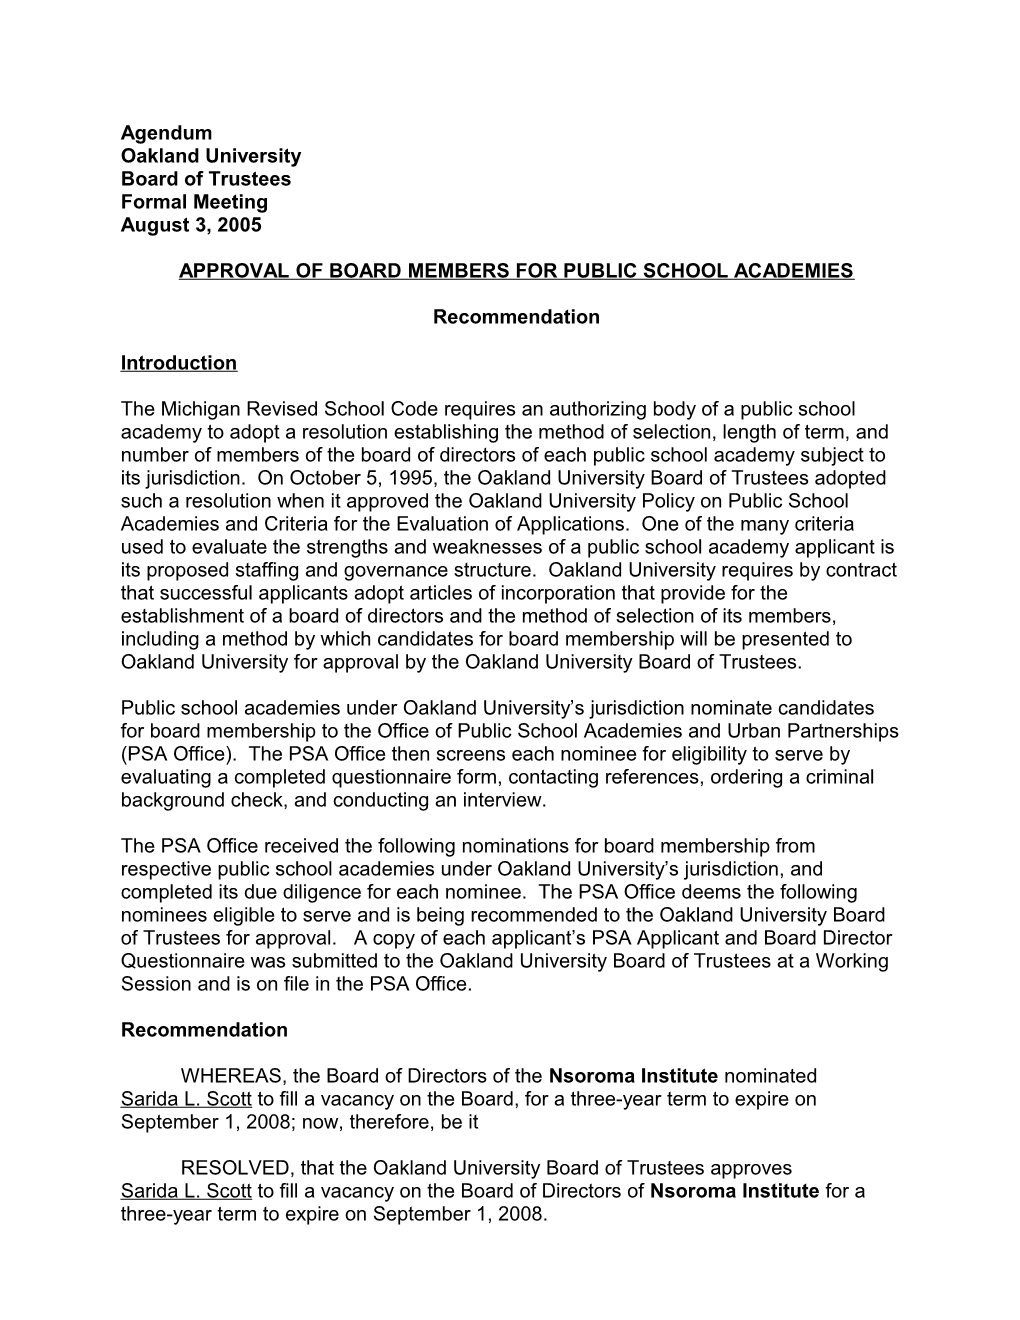 Approval of Board Members for Public School Academies